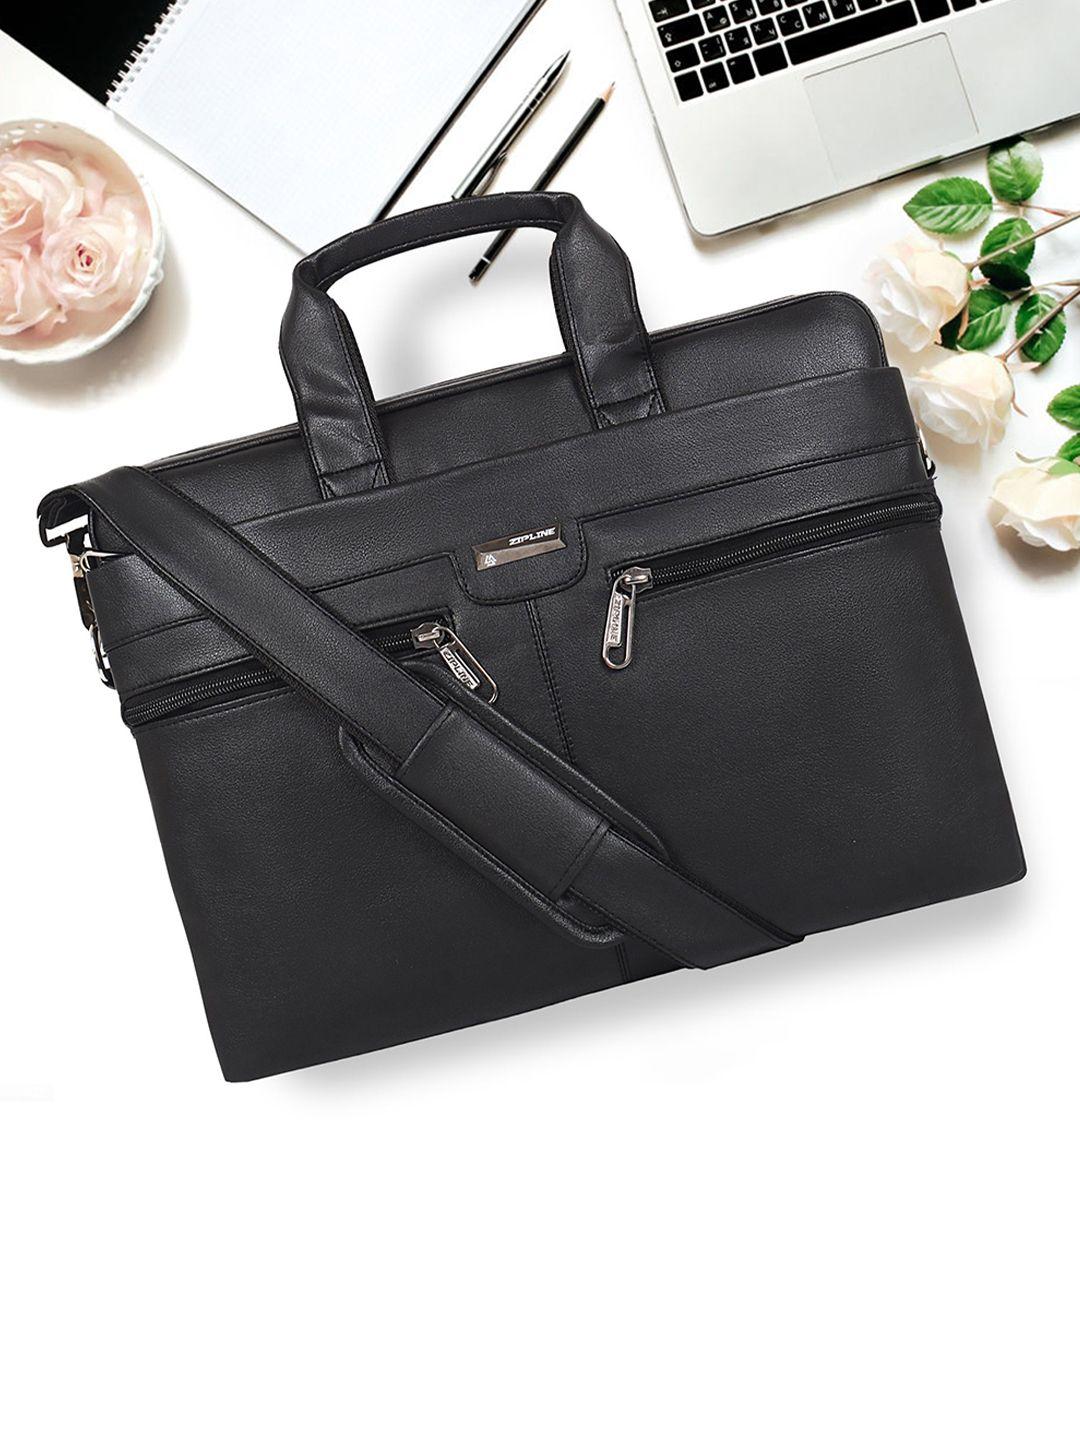 zipline unisex black textured laptop bag